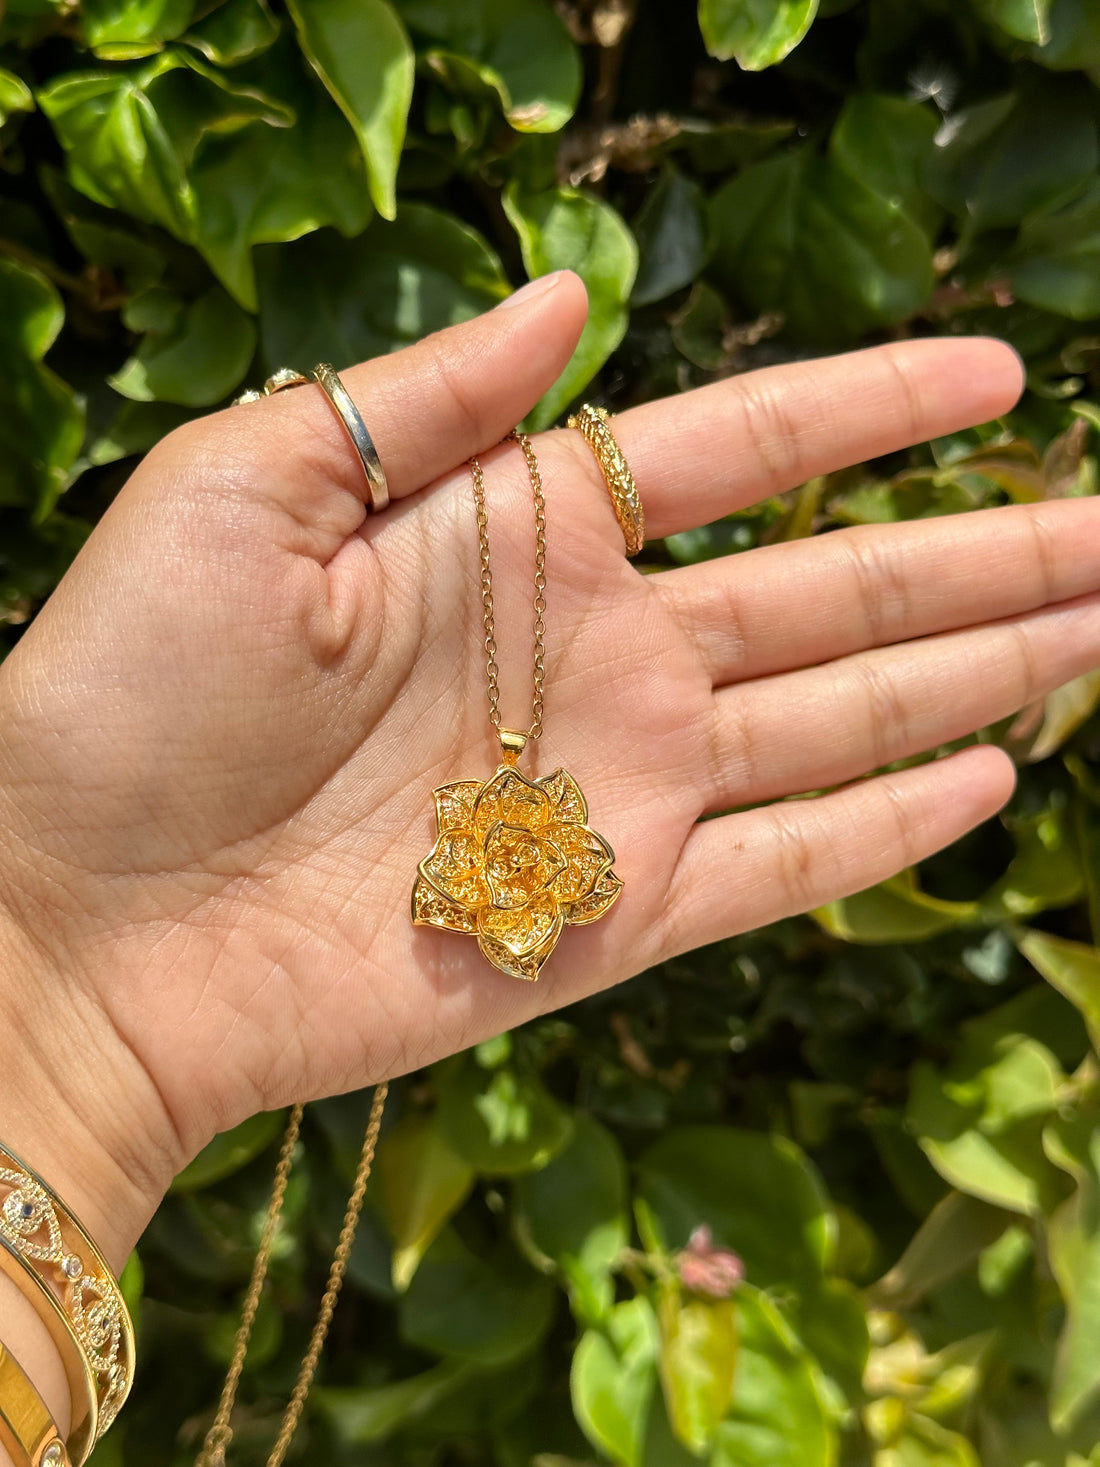 Gold Flower Necklace